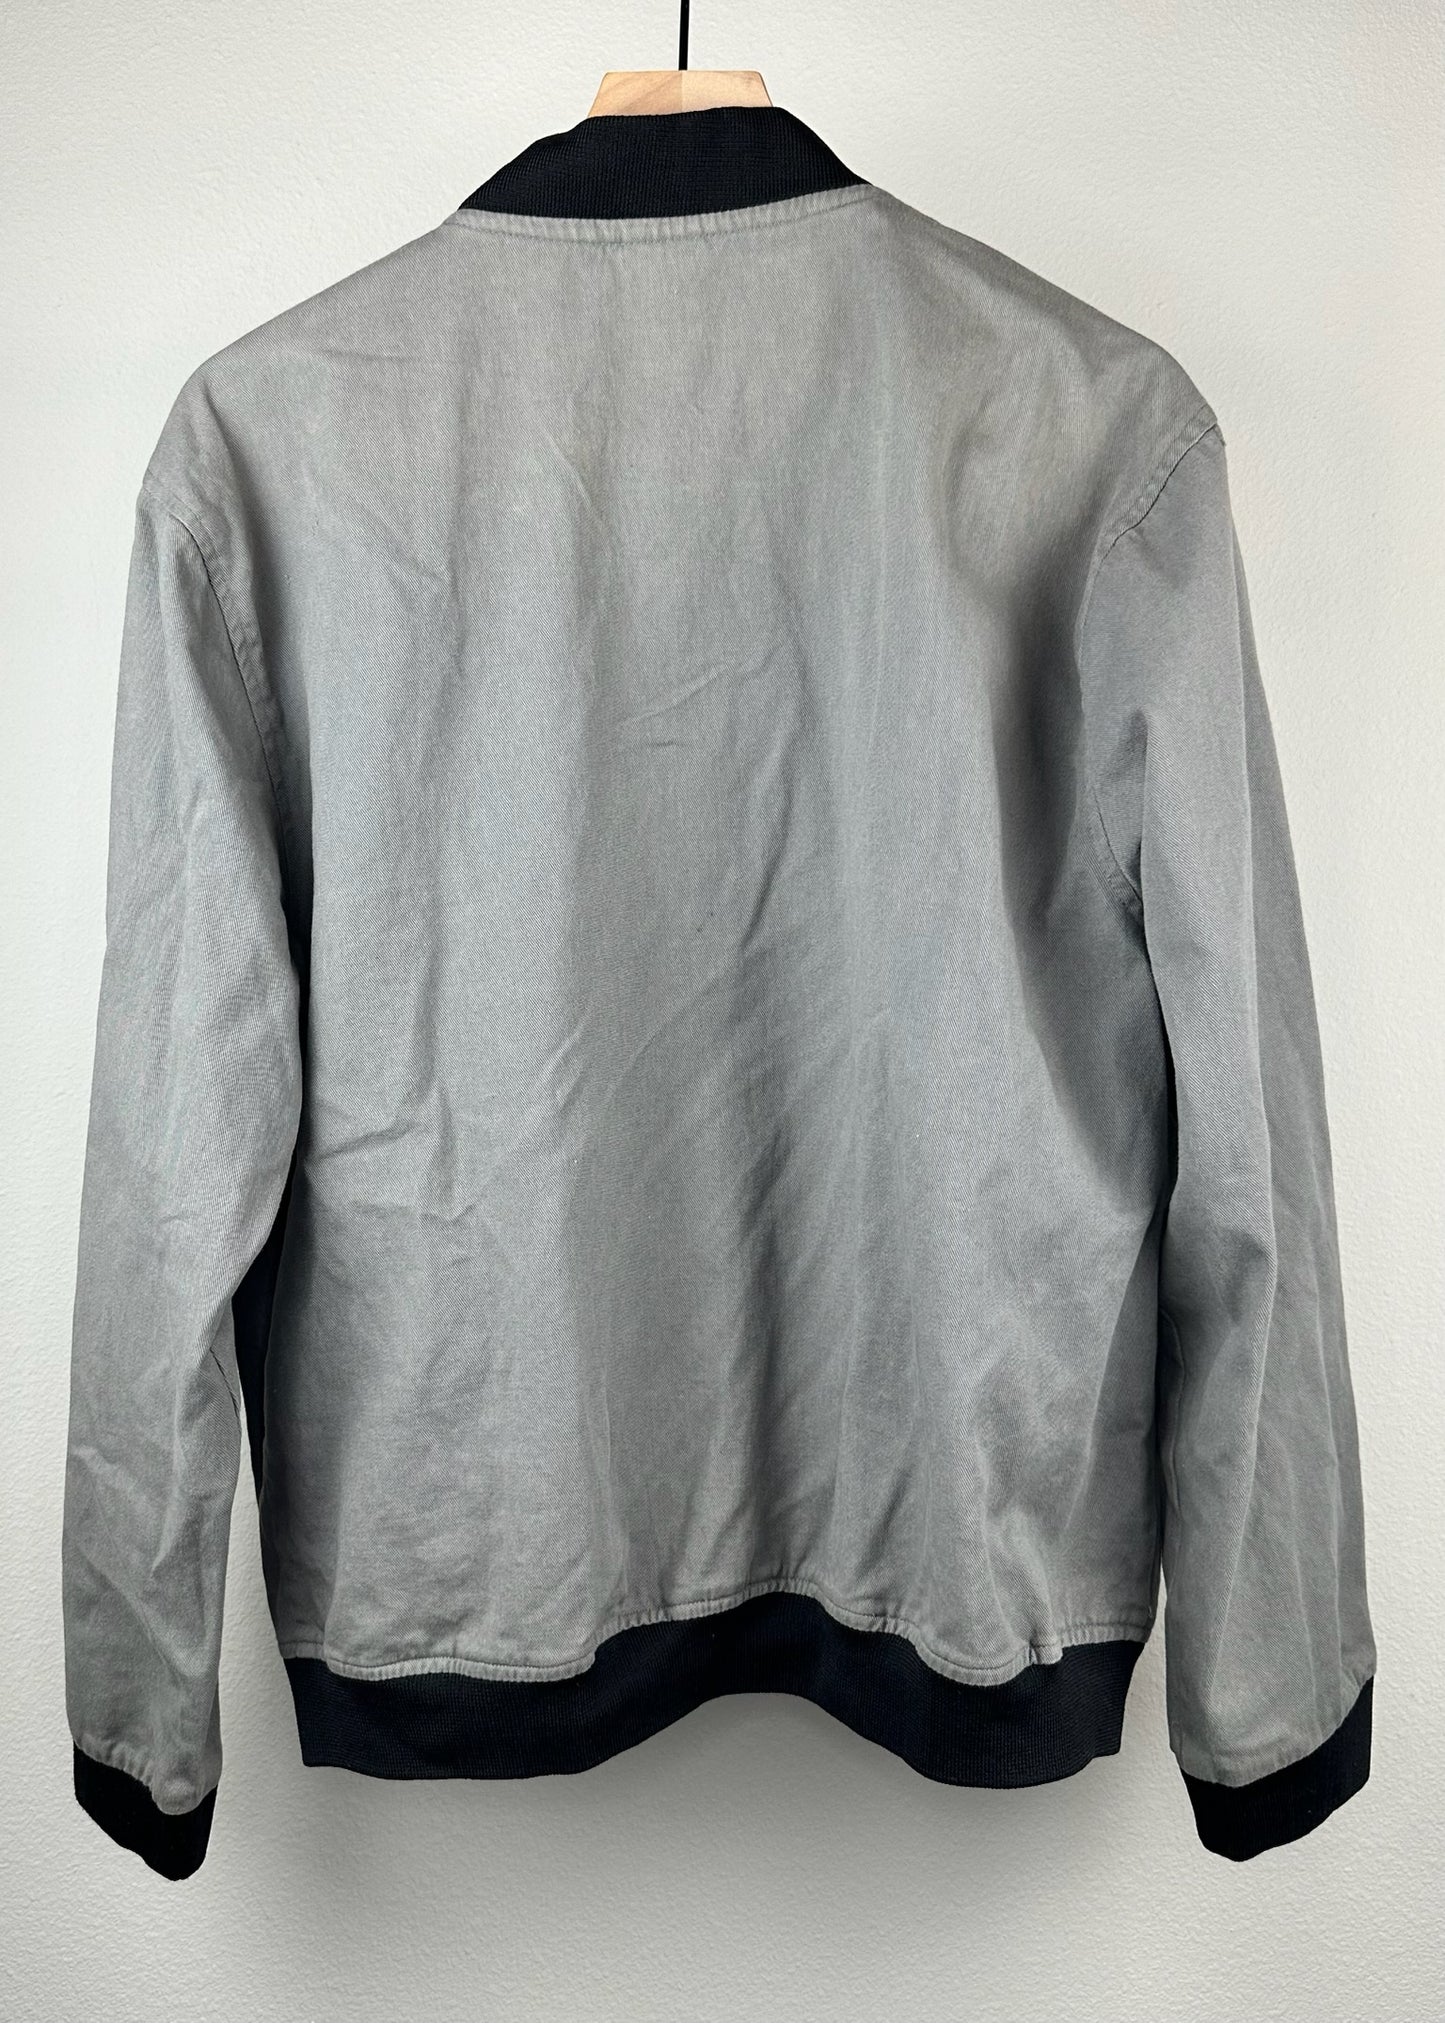 Mens Grey Jacket by Molokai Surf Co.